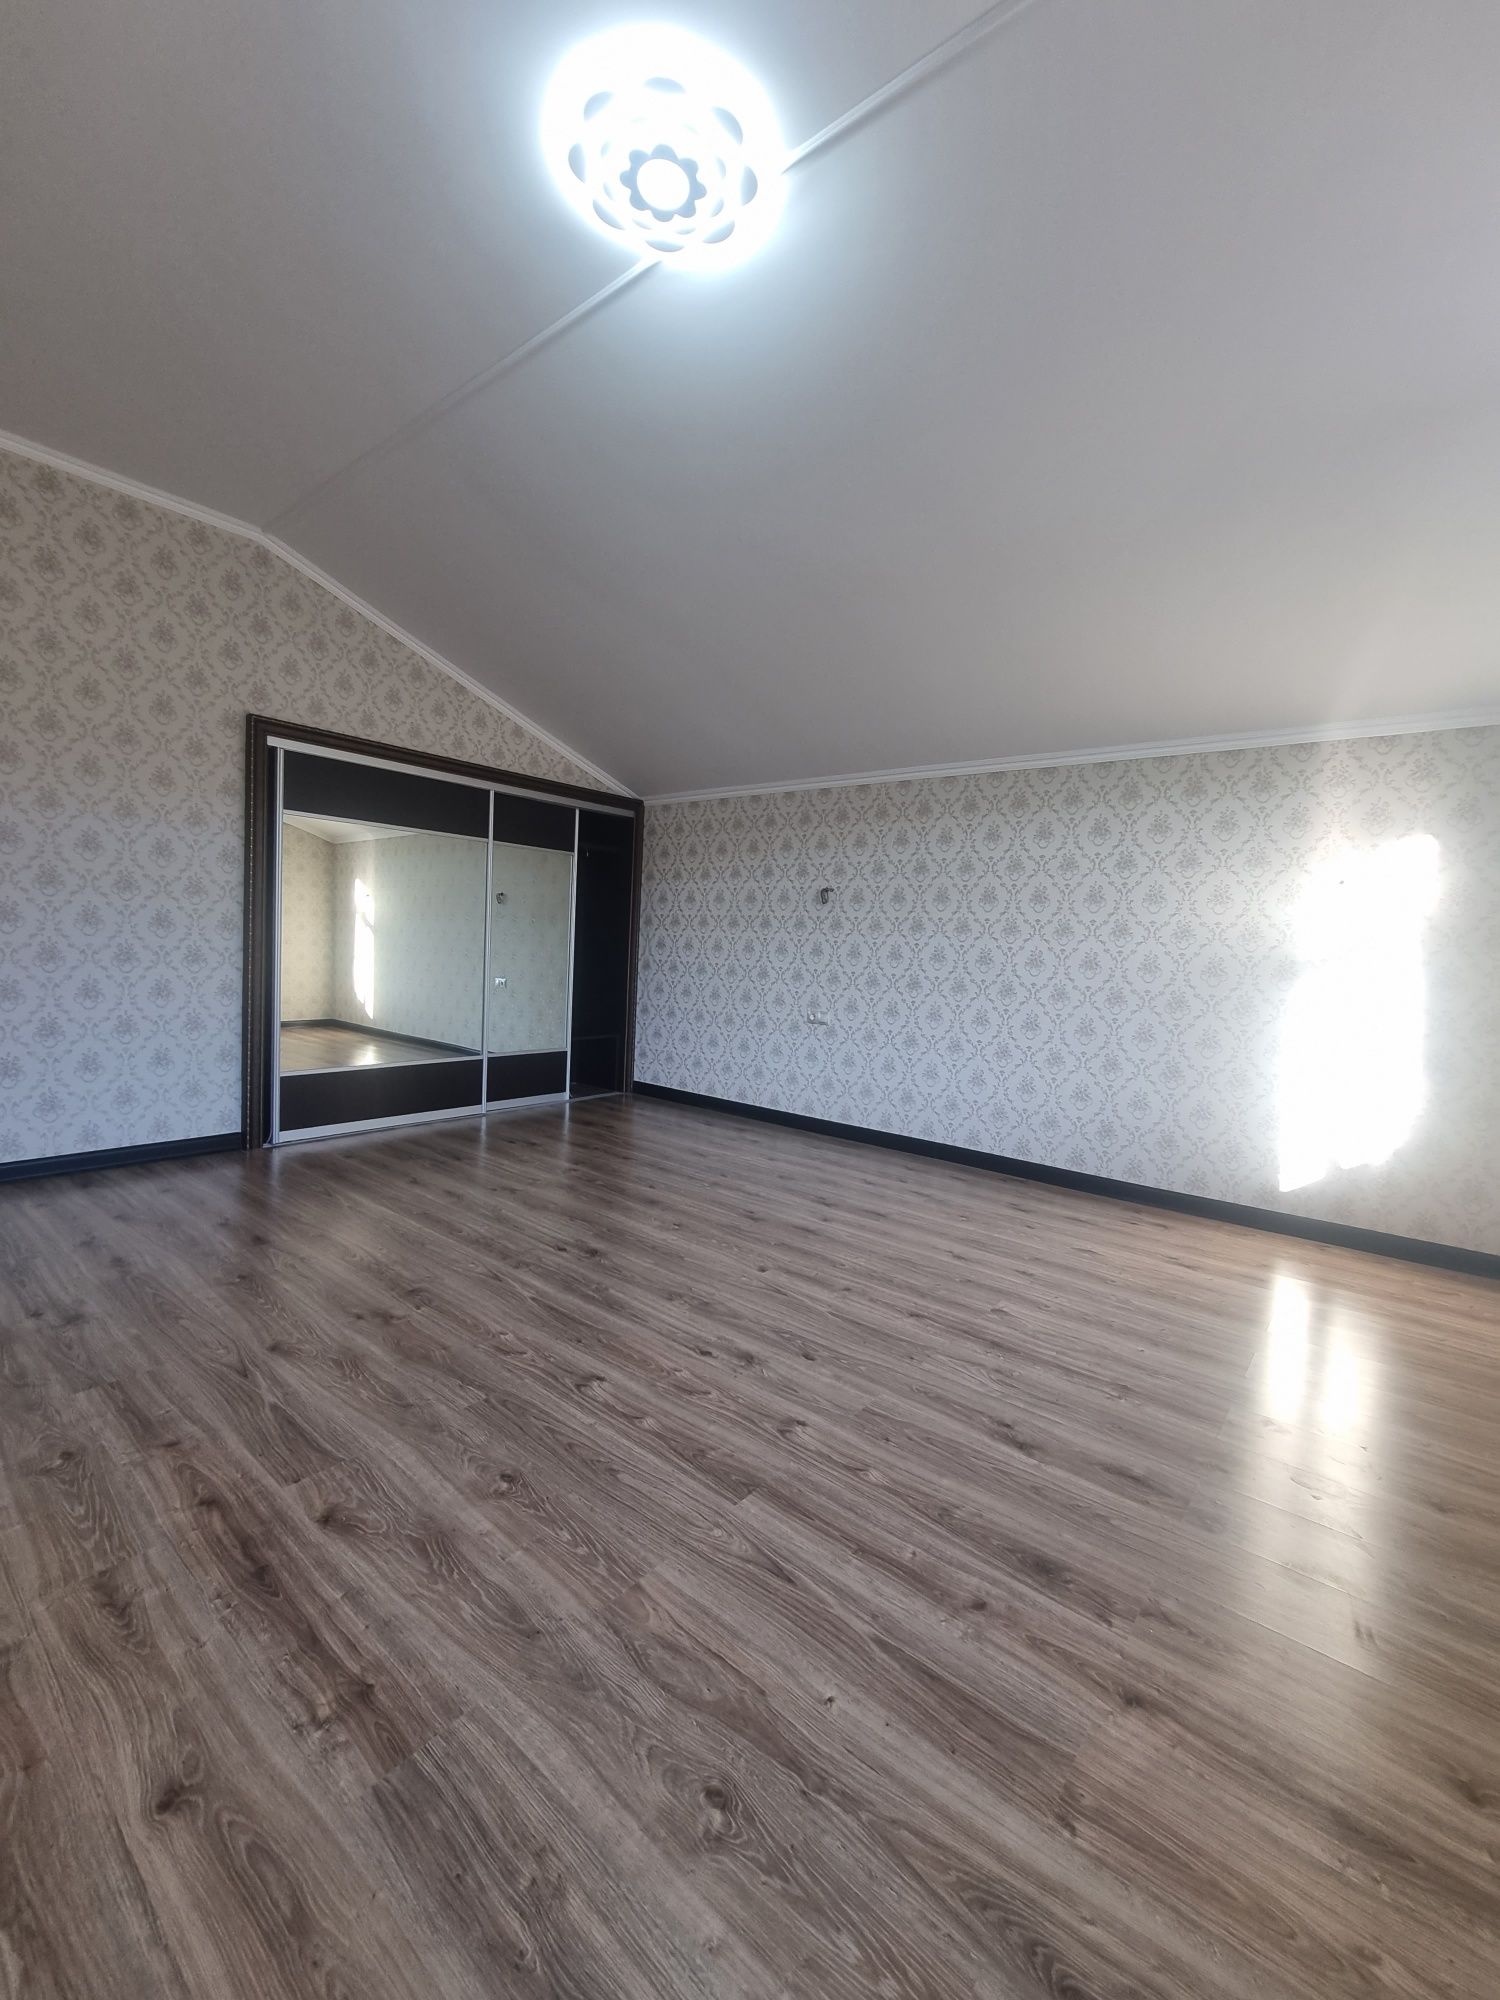 Продам 4-х комнатный дом 279,6м² в п. Куленовка 2015гп, участок 10 сот